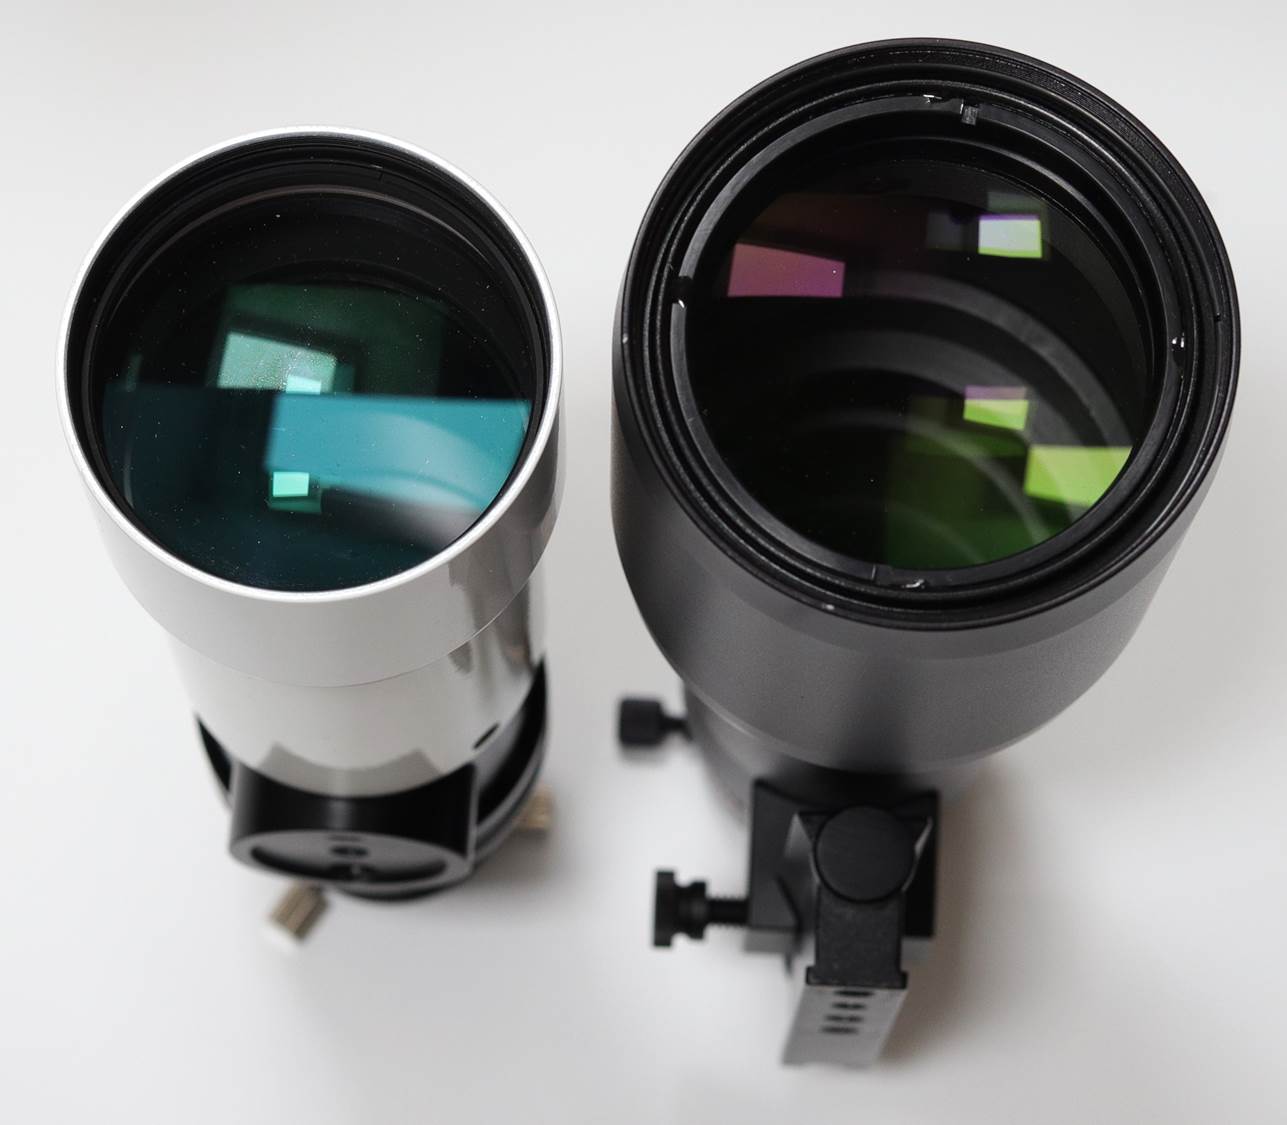 Telescope vs. Super-Telephoto Lens for Imaging? – Tele Vue Optics